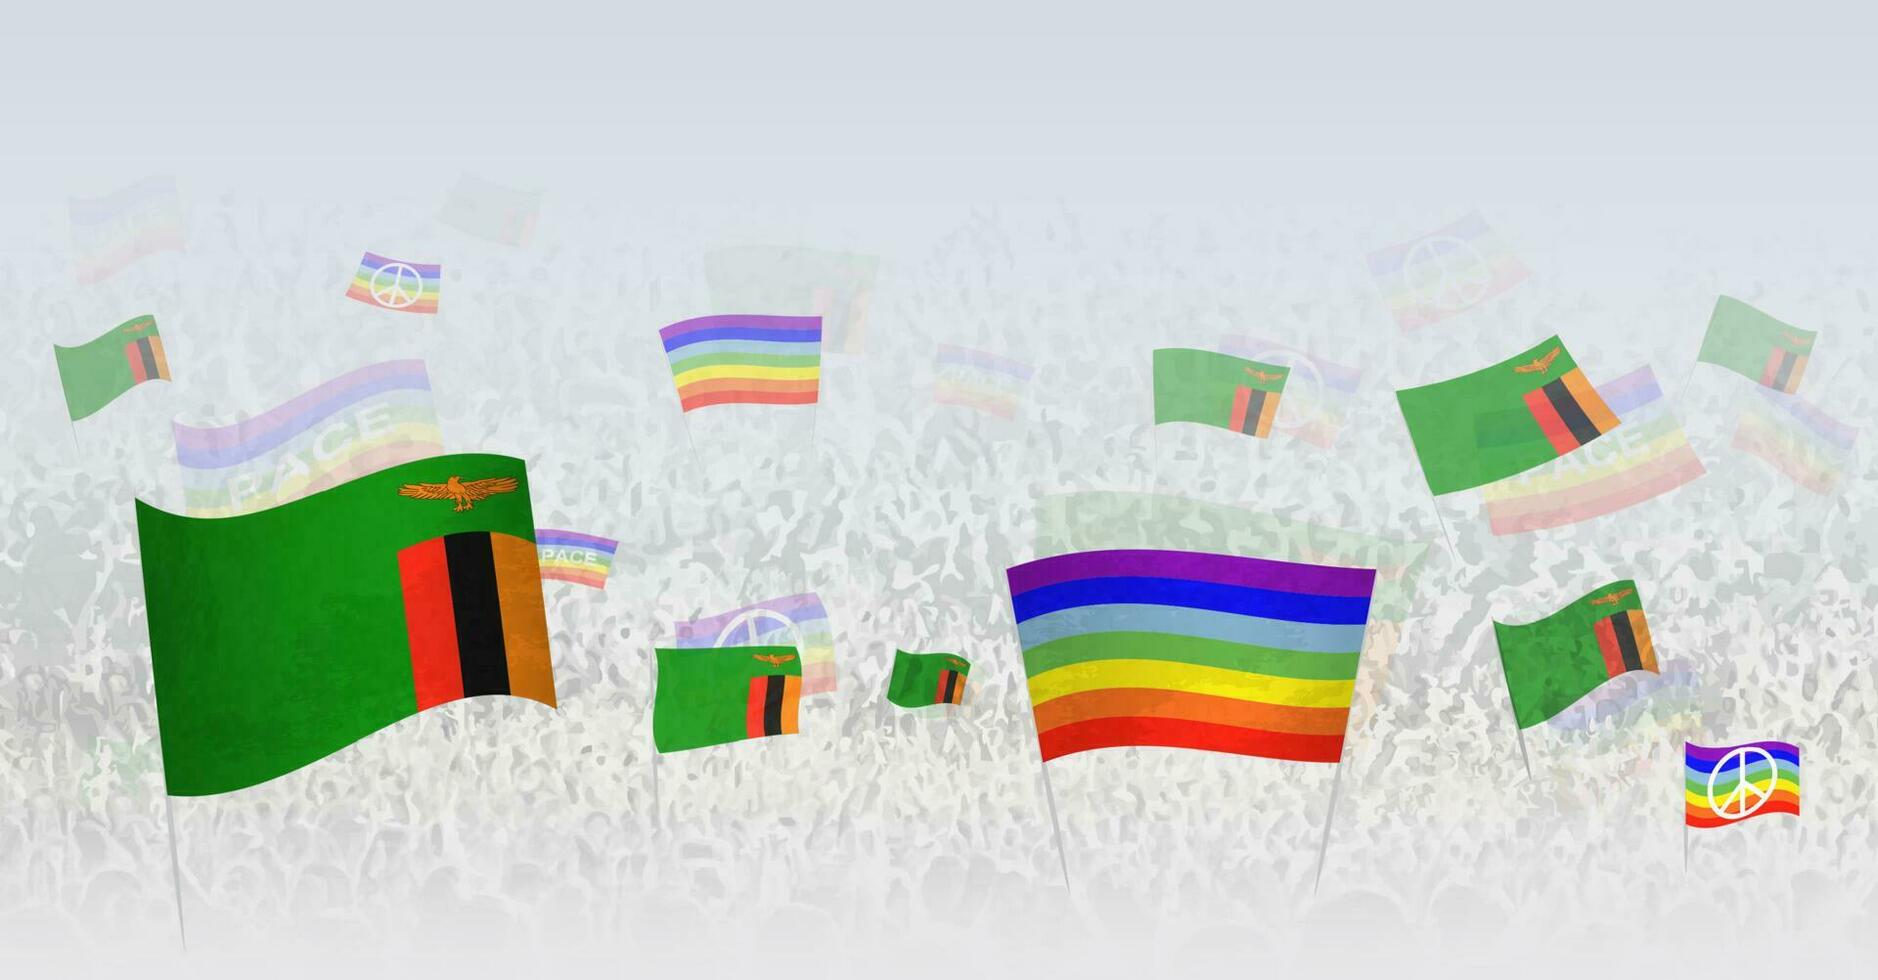 mensen golvend vrede vlaggen en vlaggen van Zambia. illustratie van menigte vieren of protesteren met vlag van Zambia en de vrede vlag. vector